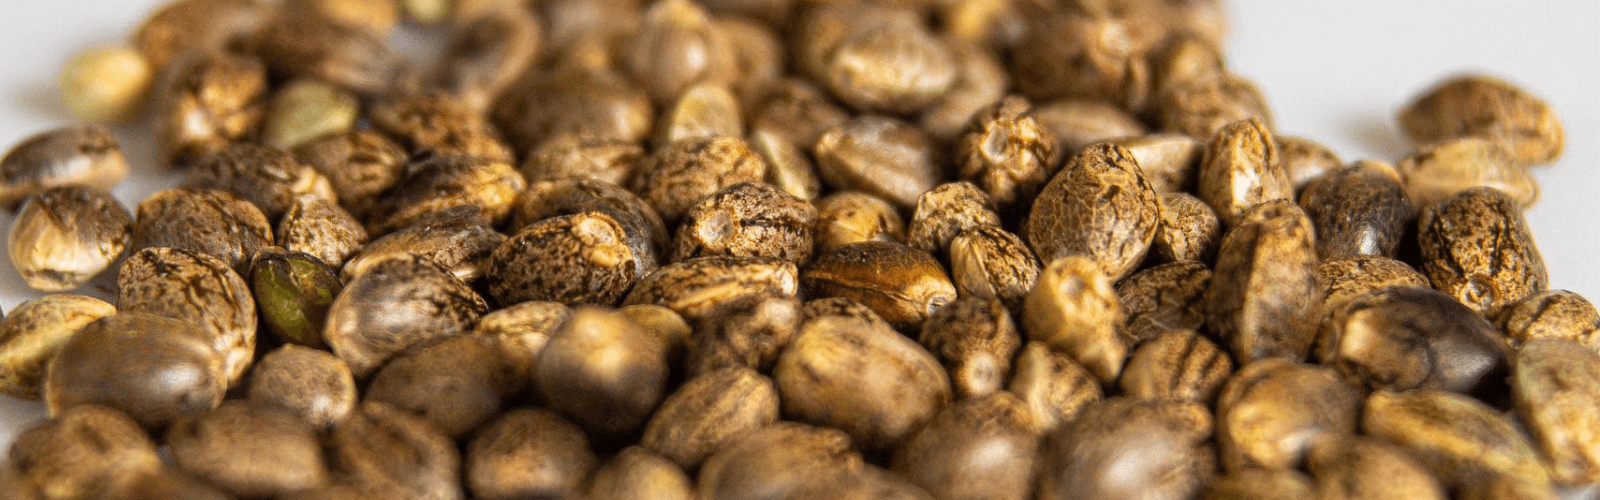 Buying Cannabis seeds in bulk